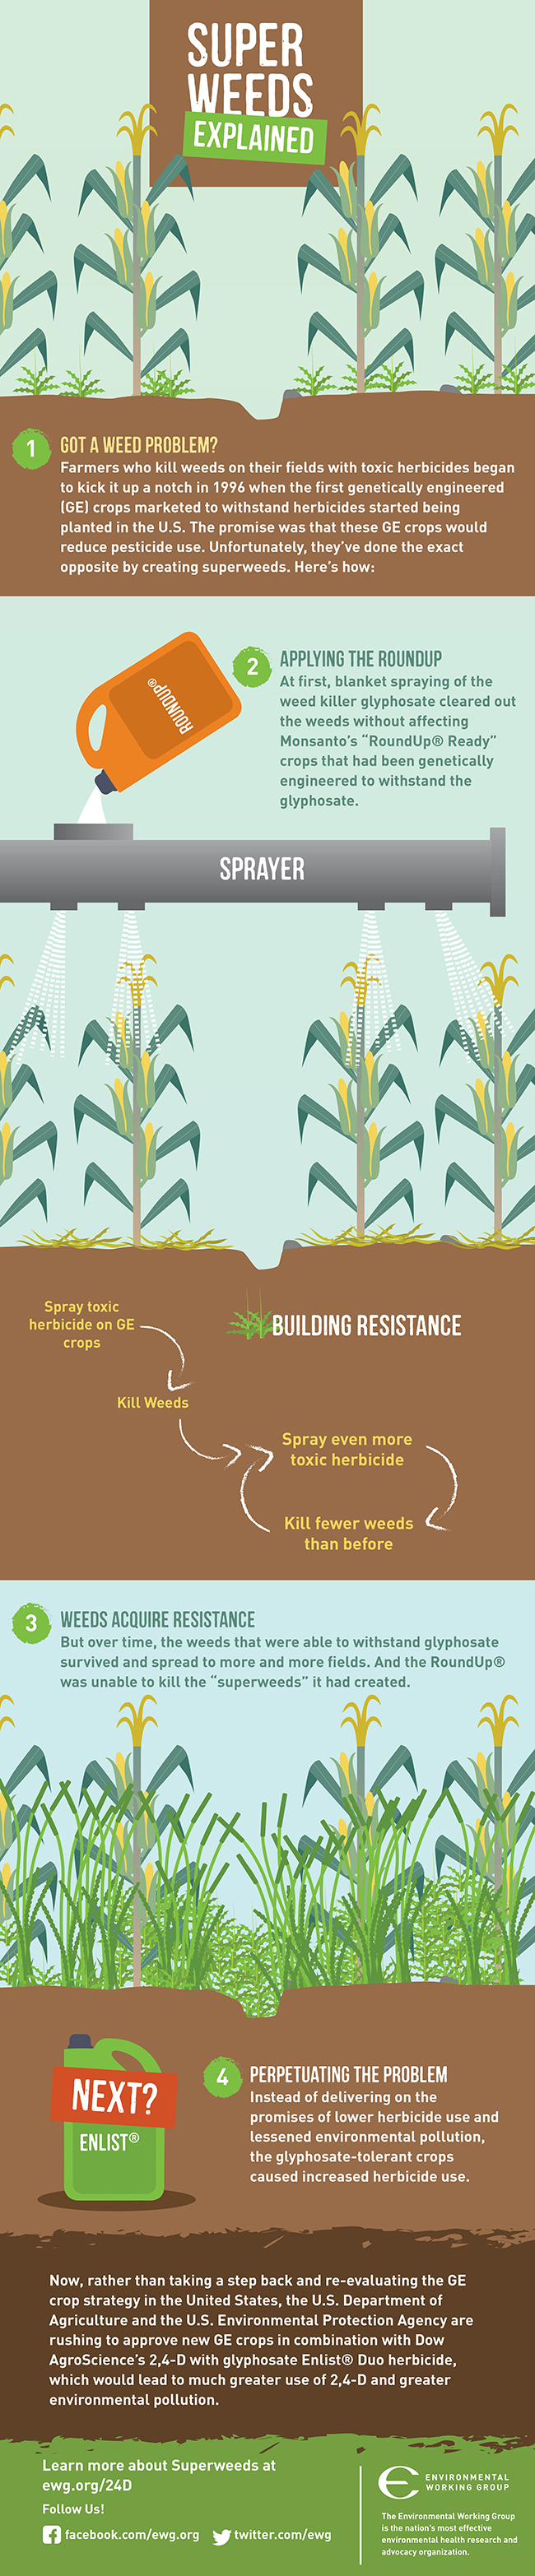 Infographic explaining super weeds